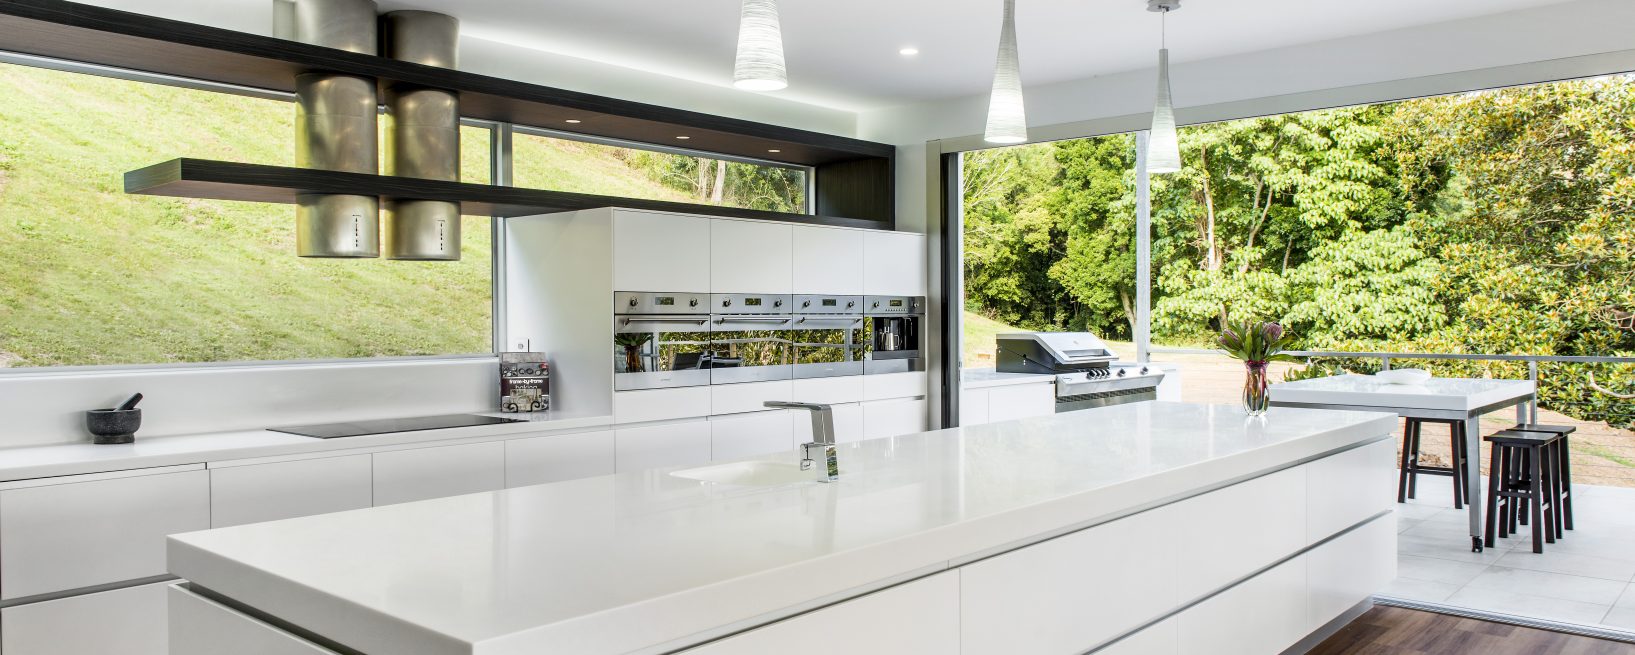 Brisbane Kitchen Design | Kitchen Renovations by Sublime Architectural ...